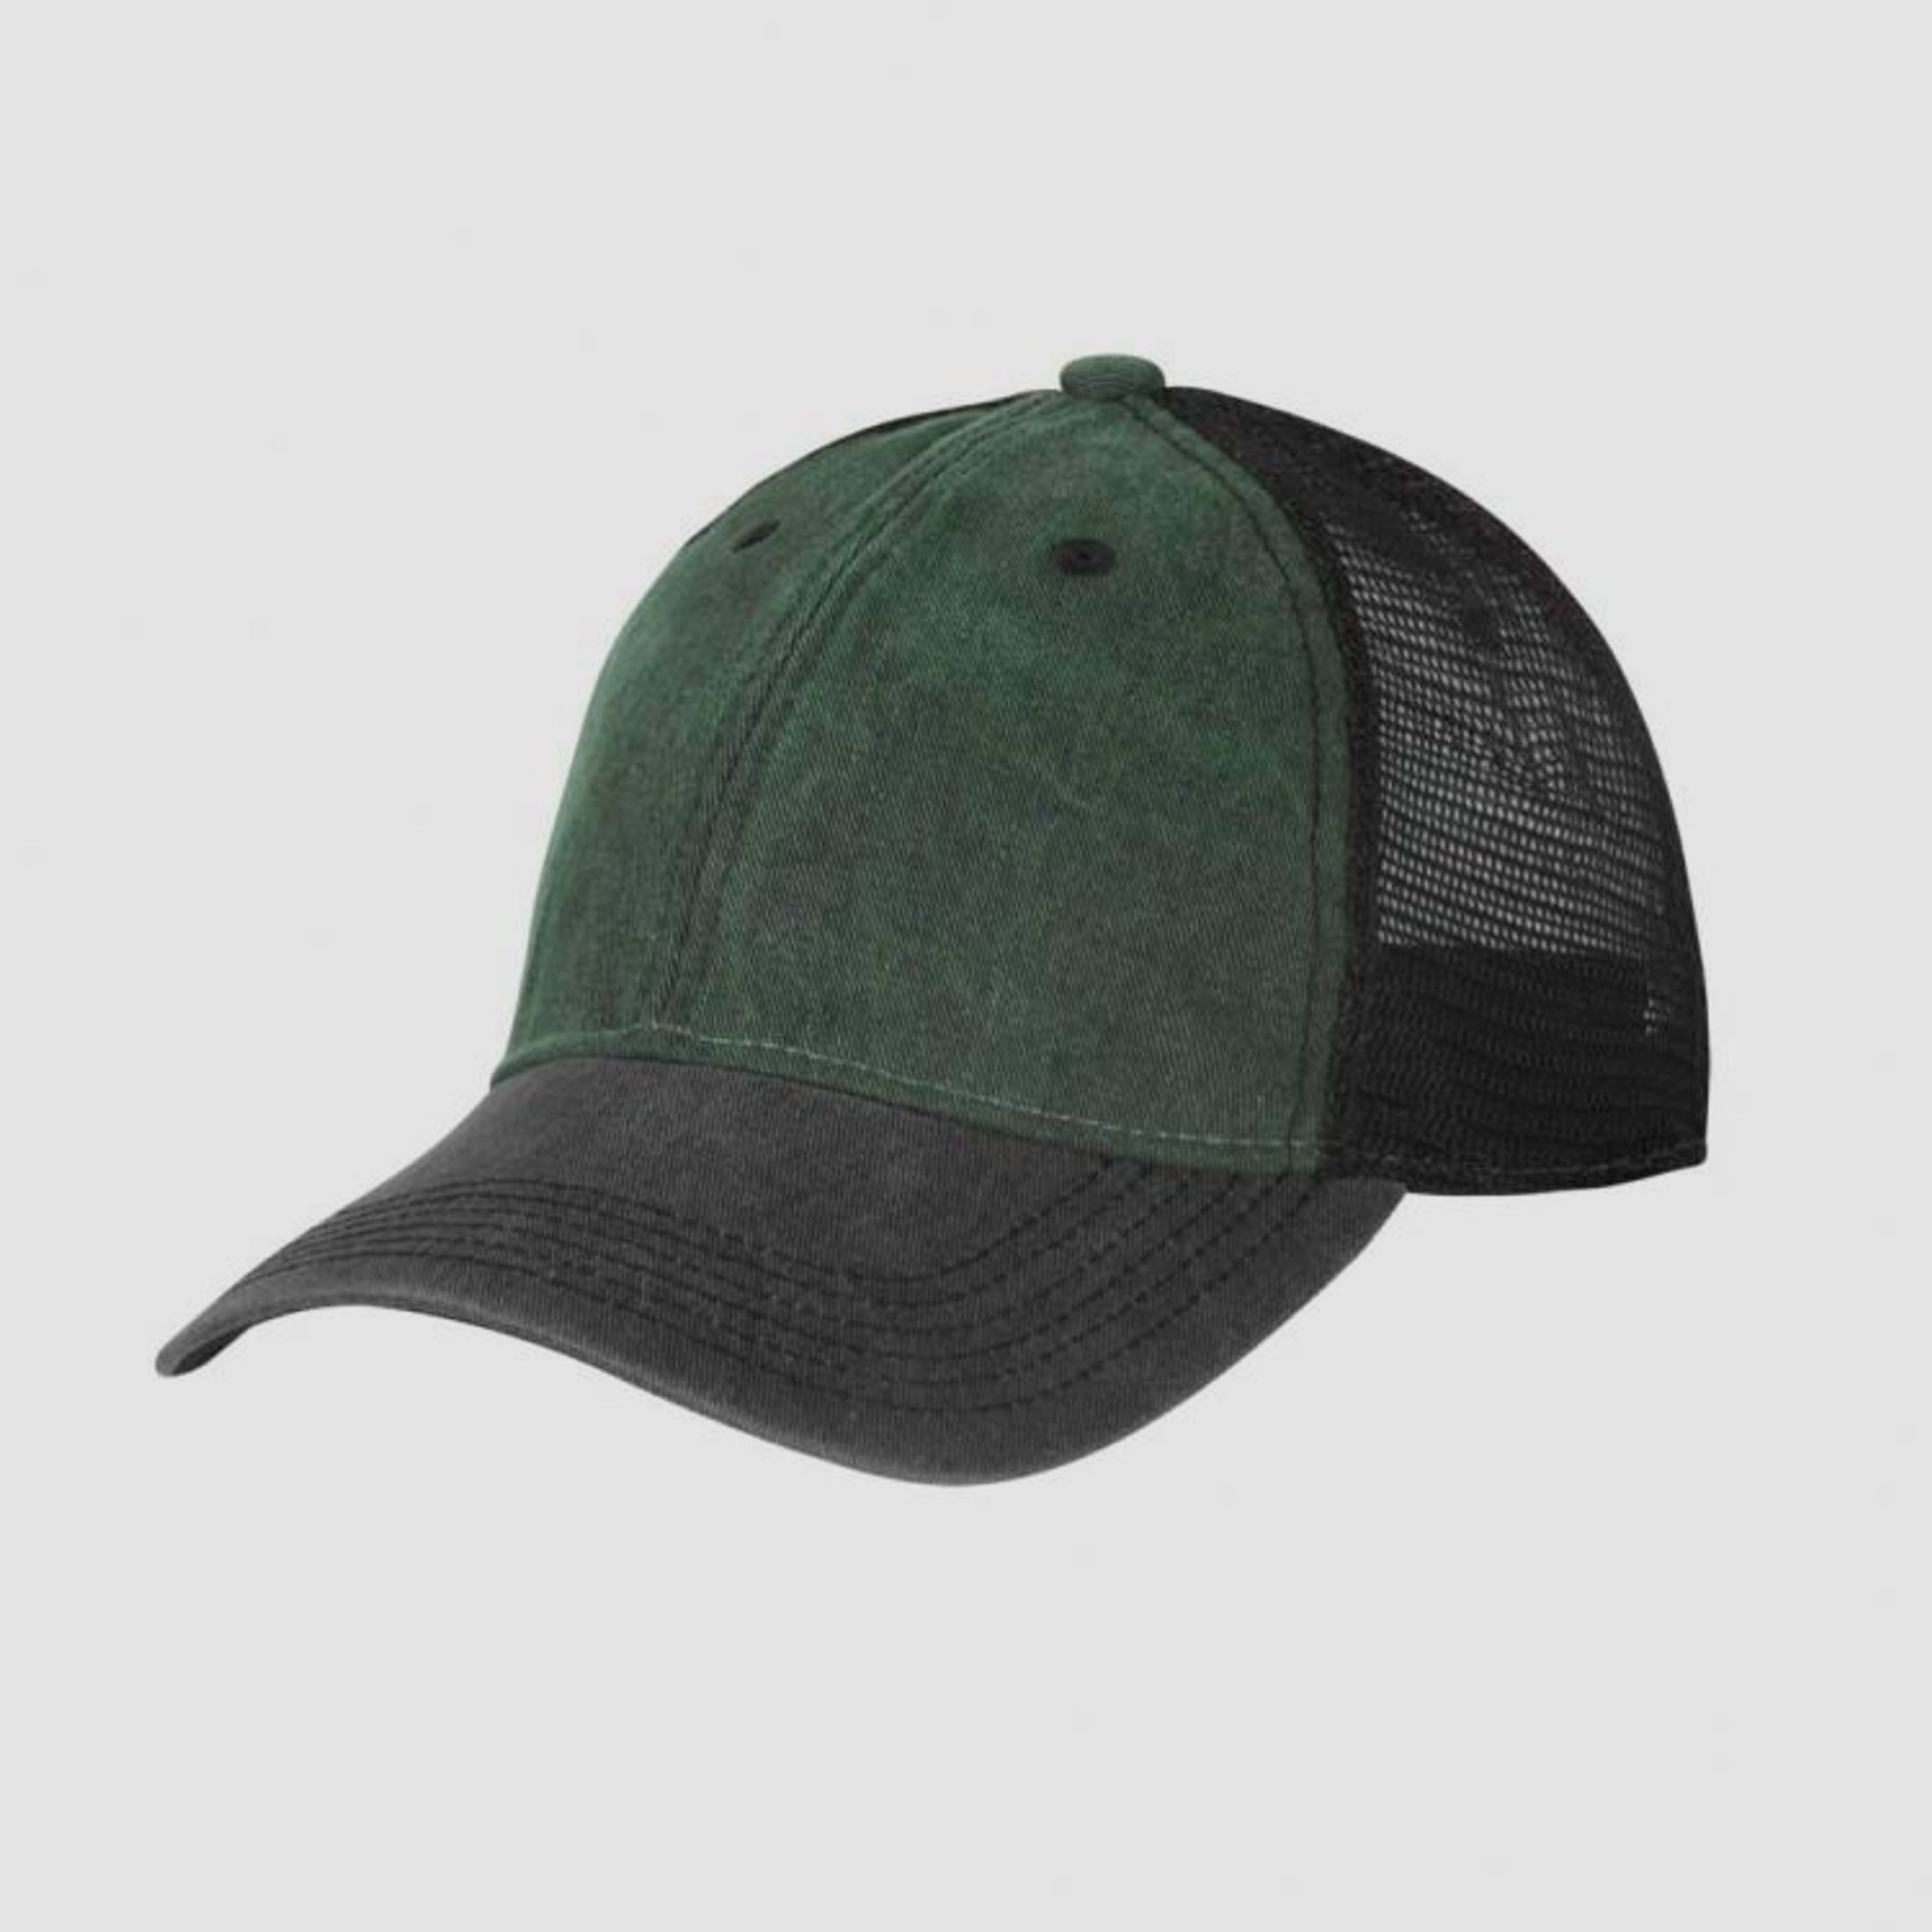 HELIKON-TEX TRUCKER MESH CAP - Washed Dark Green-Black